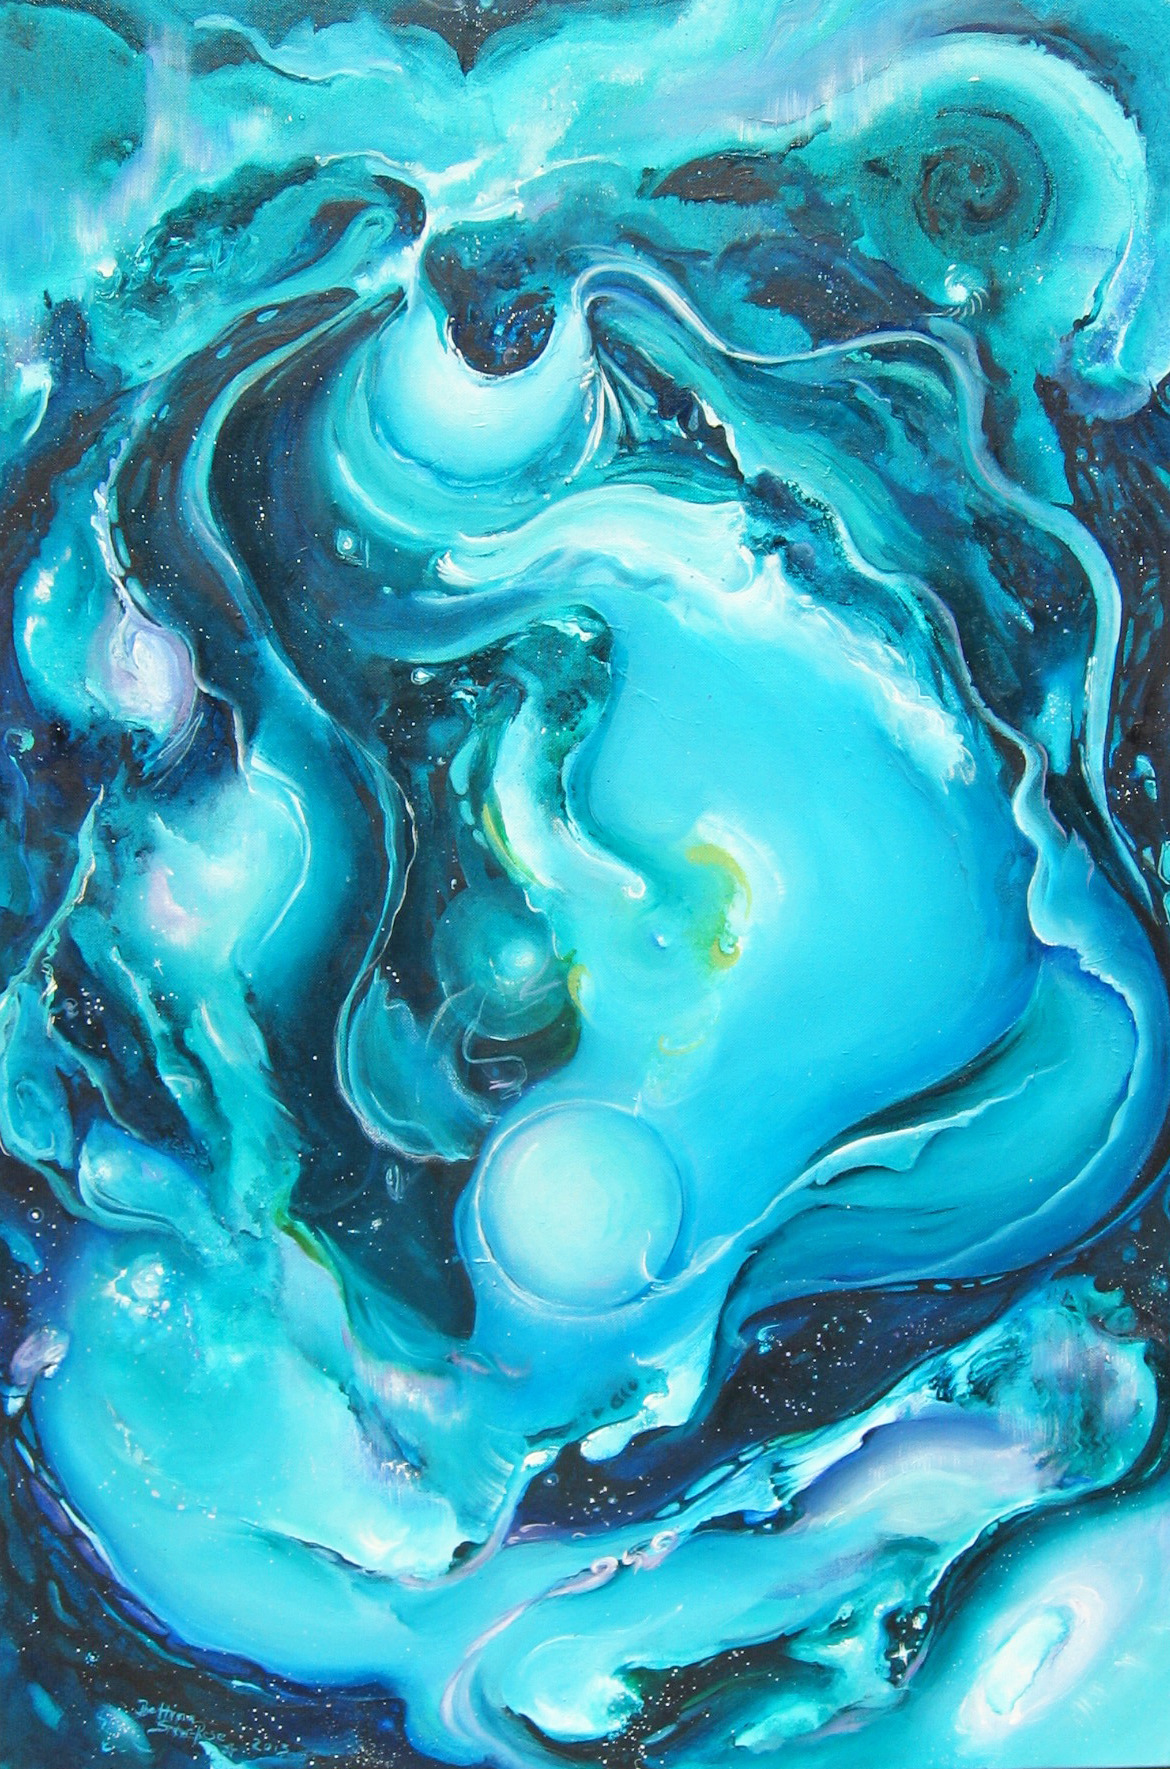 Dragon pearl by bettina madini acrylic on canvas 36x24 slpkwq